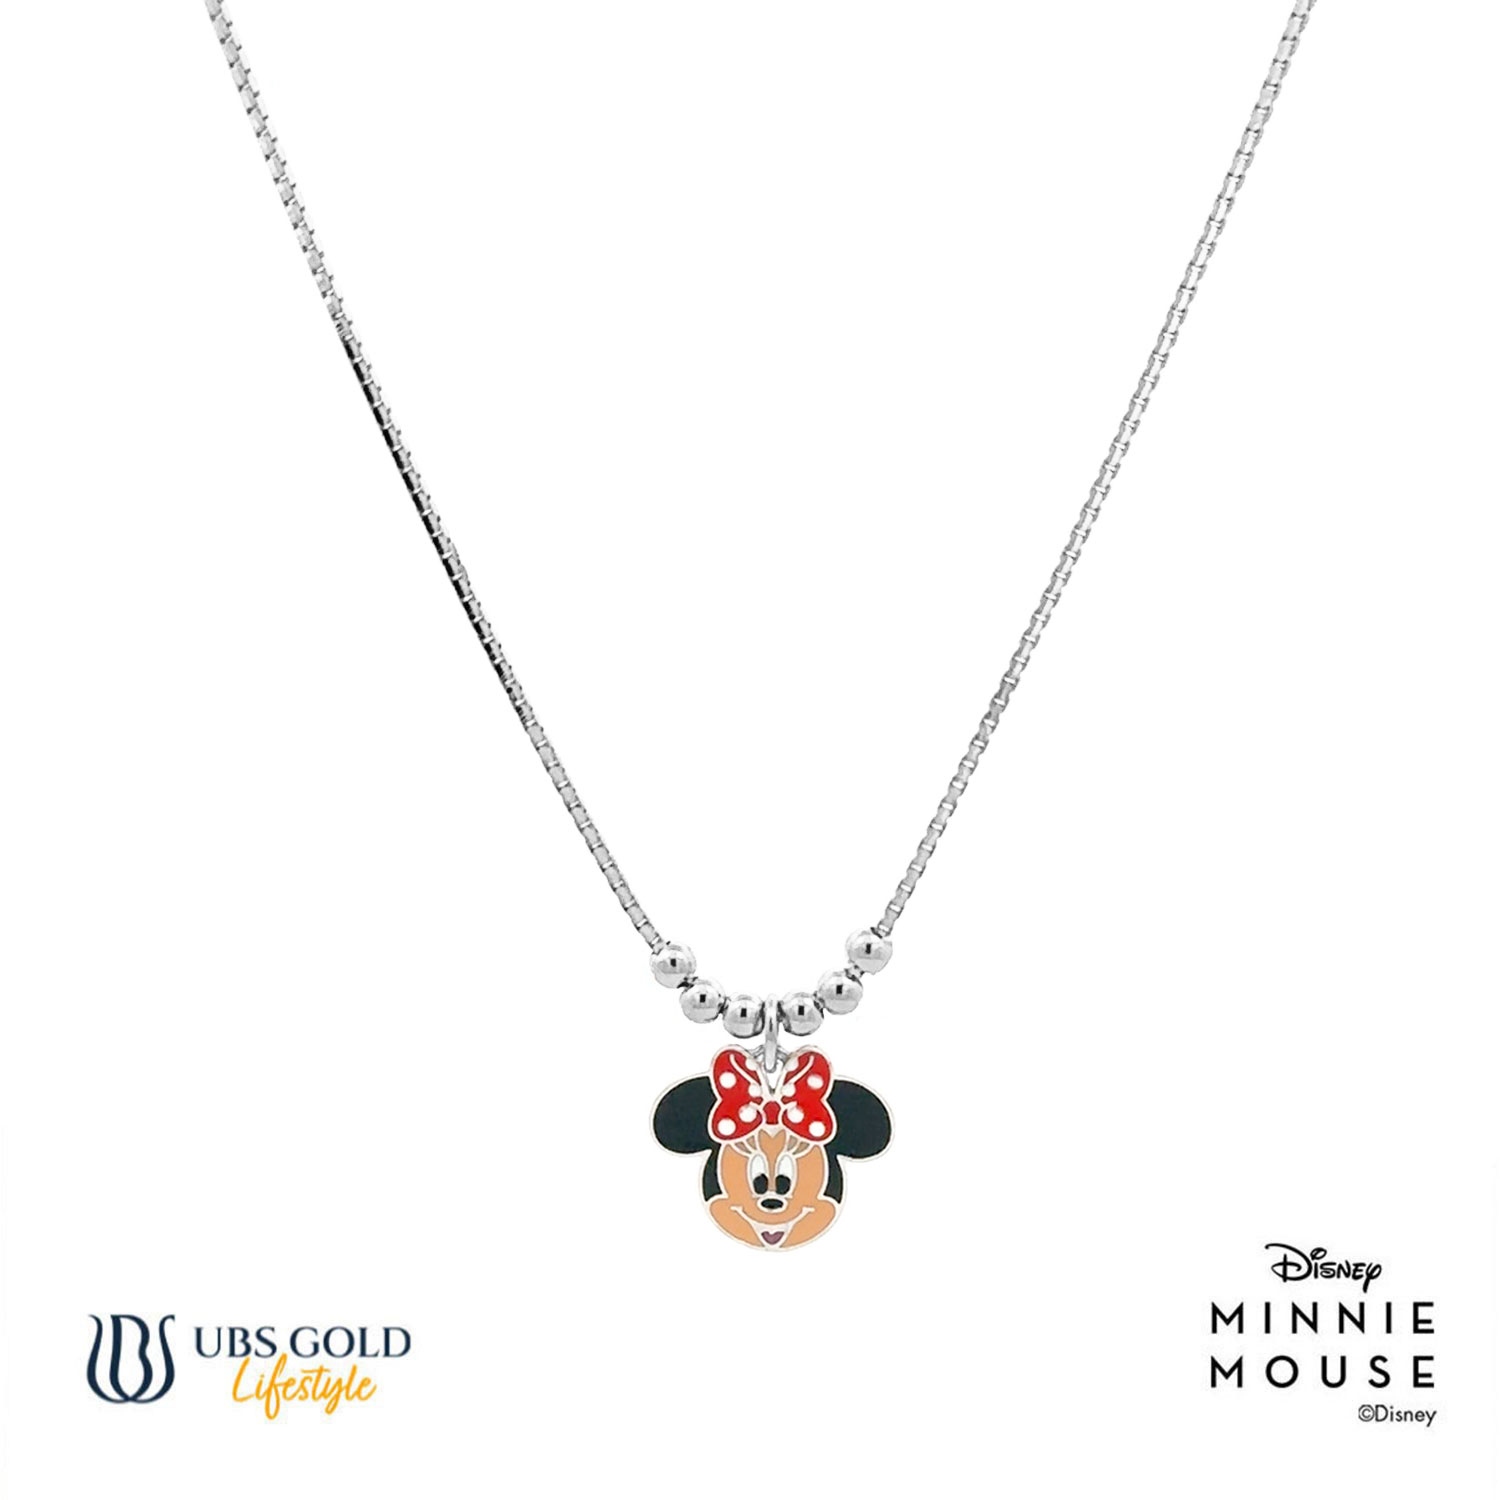 UBS Kalung Emas Anak Disney Minnie Mouse - Kky0412 - 17K